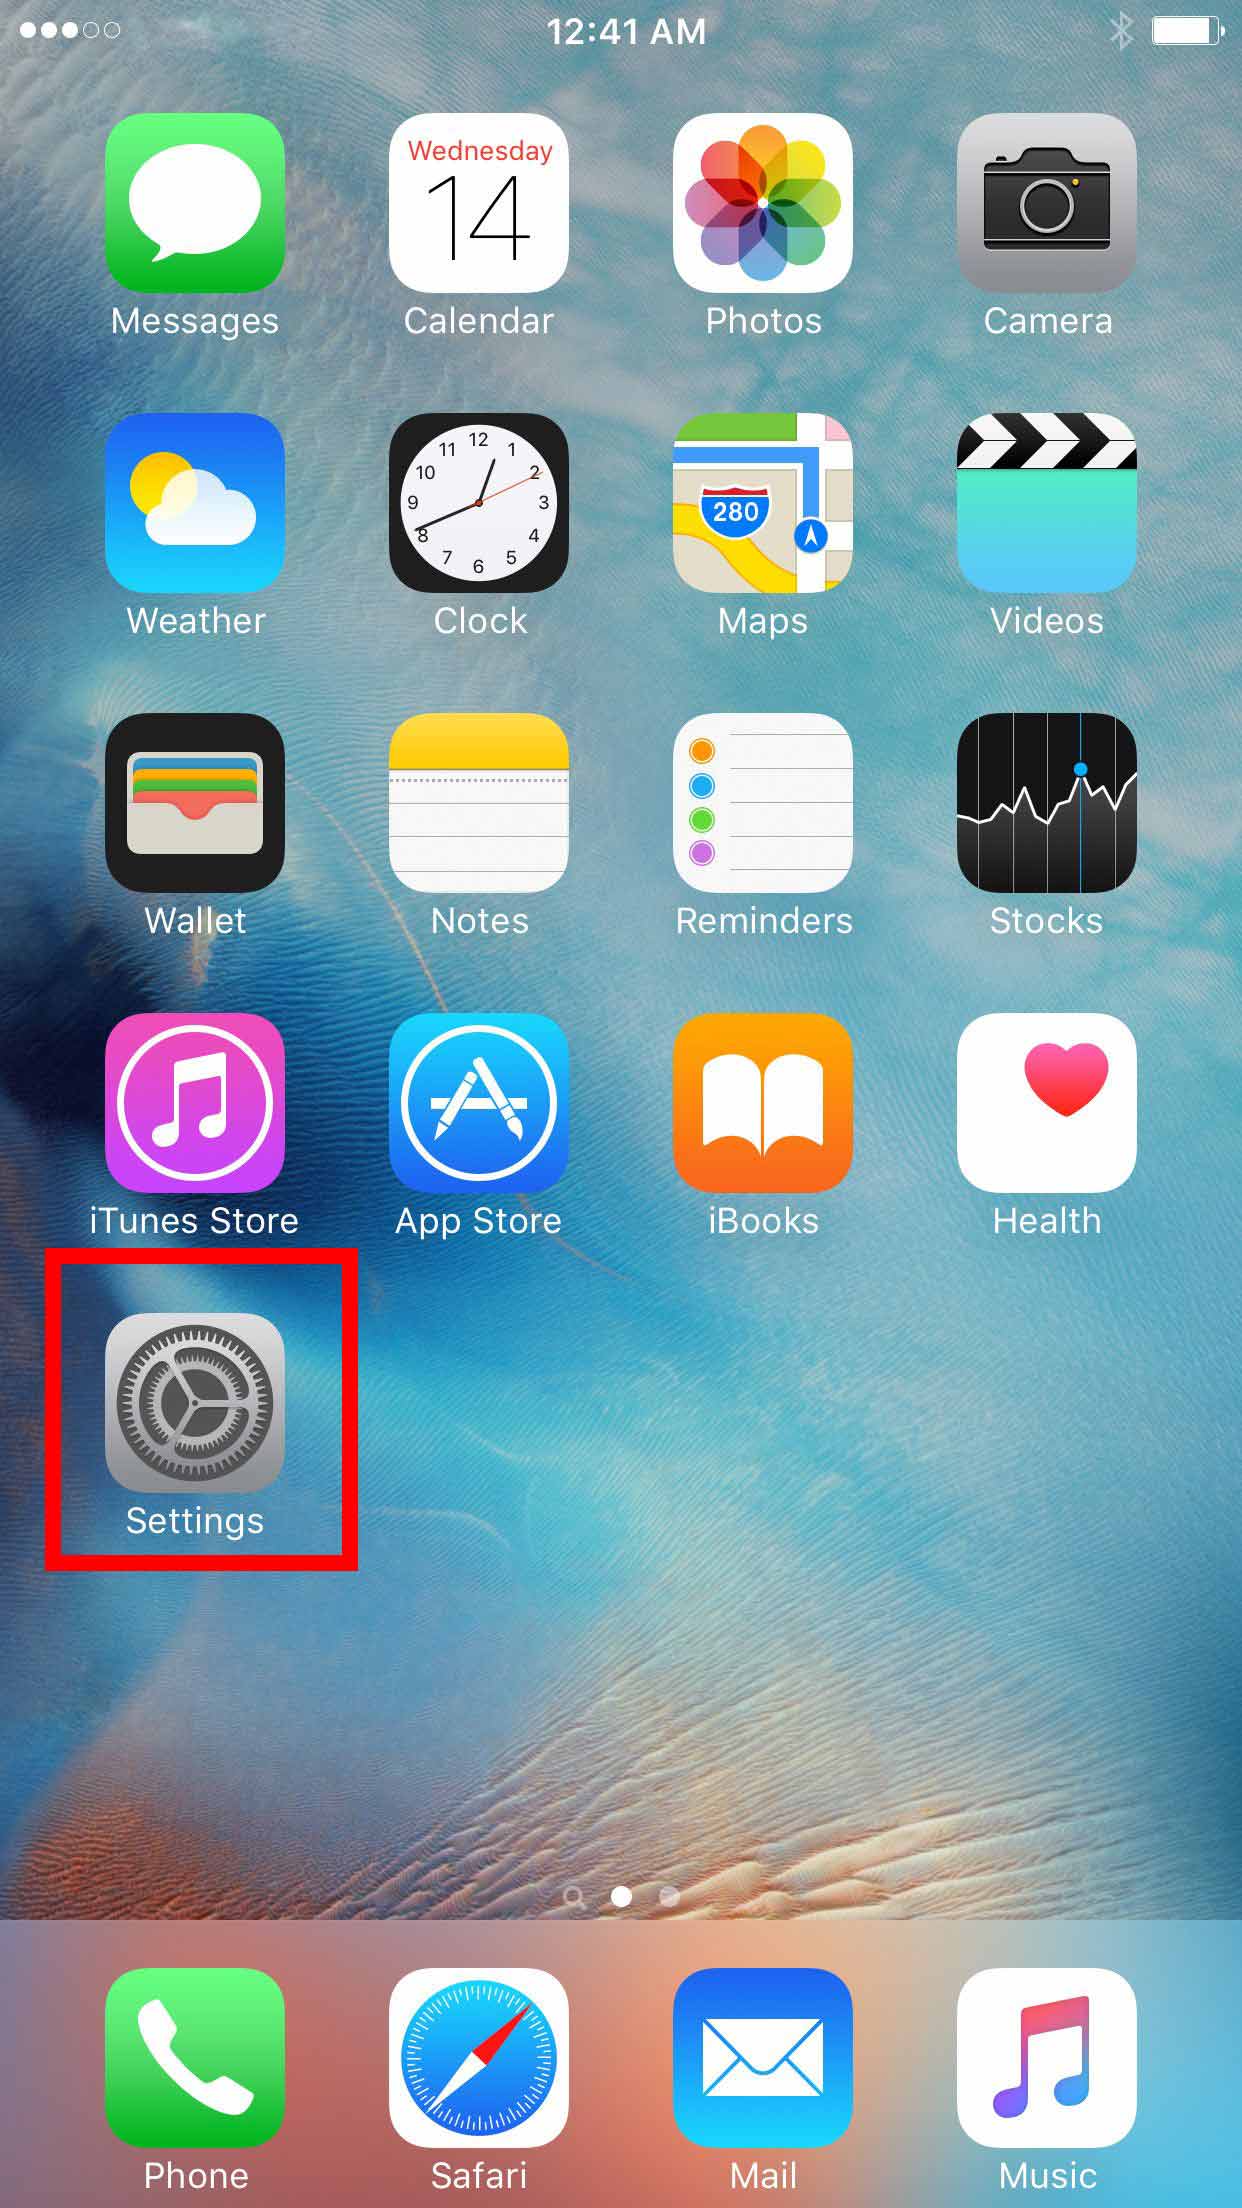 iPhone stuck on updating iCloud settings